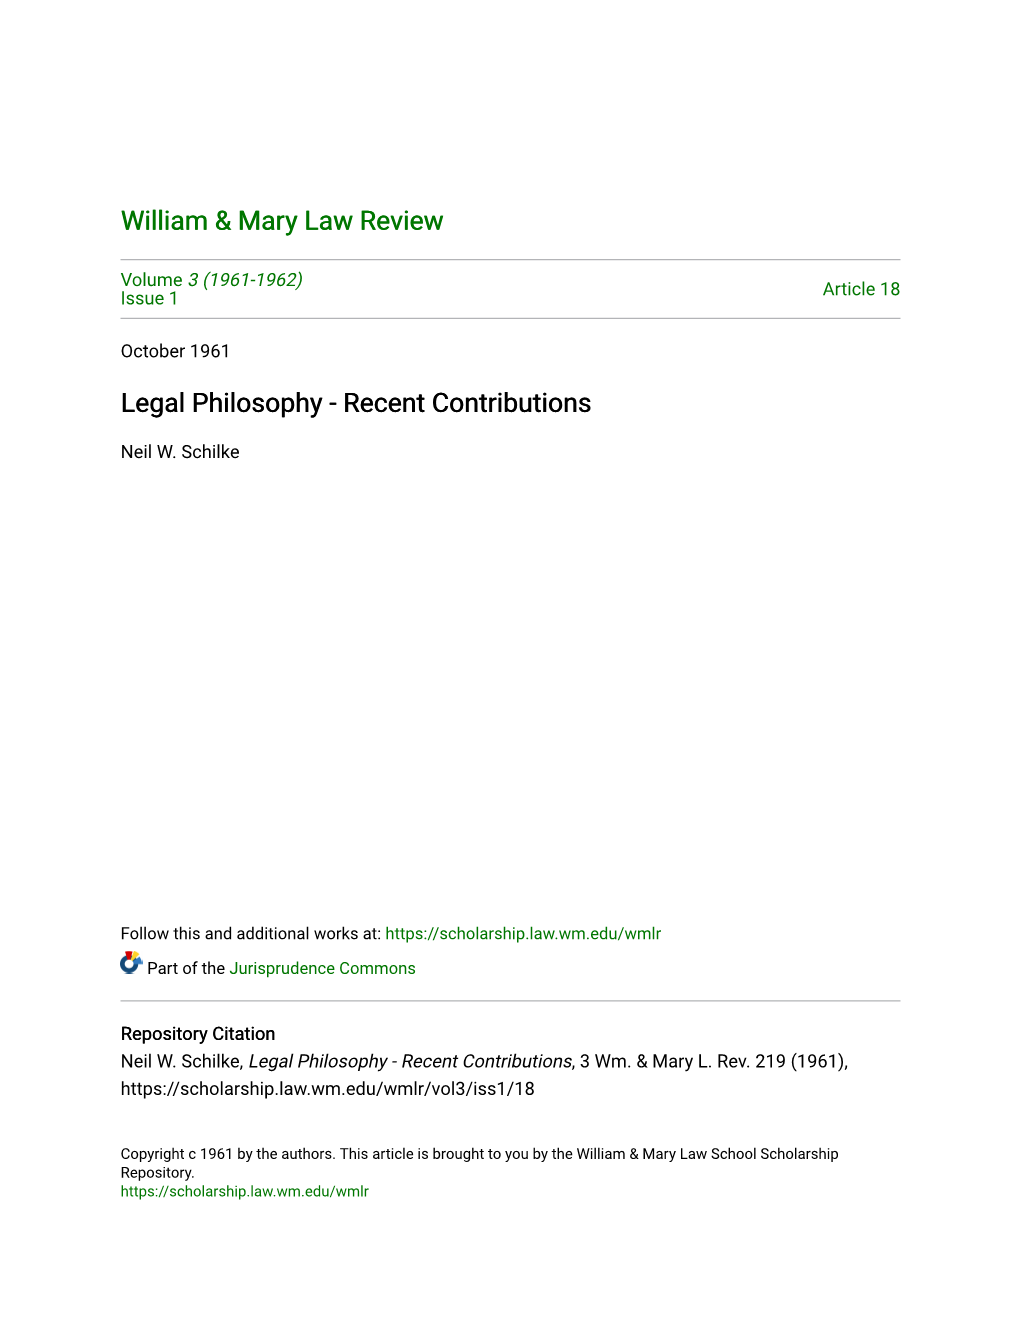 Legal Philosophy - Recent Contributions